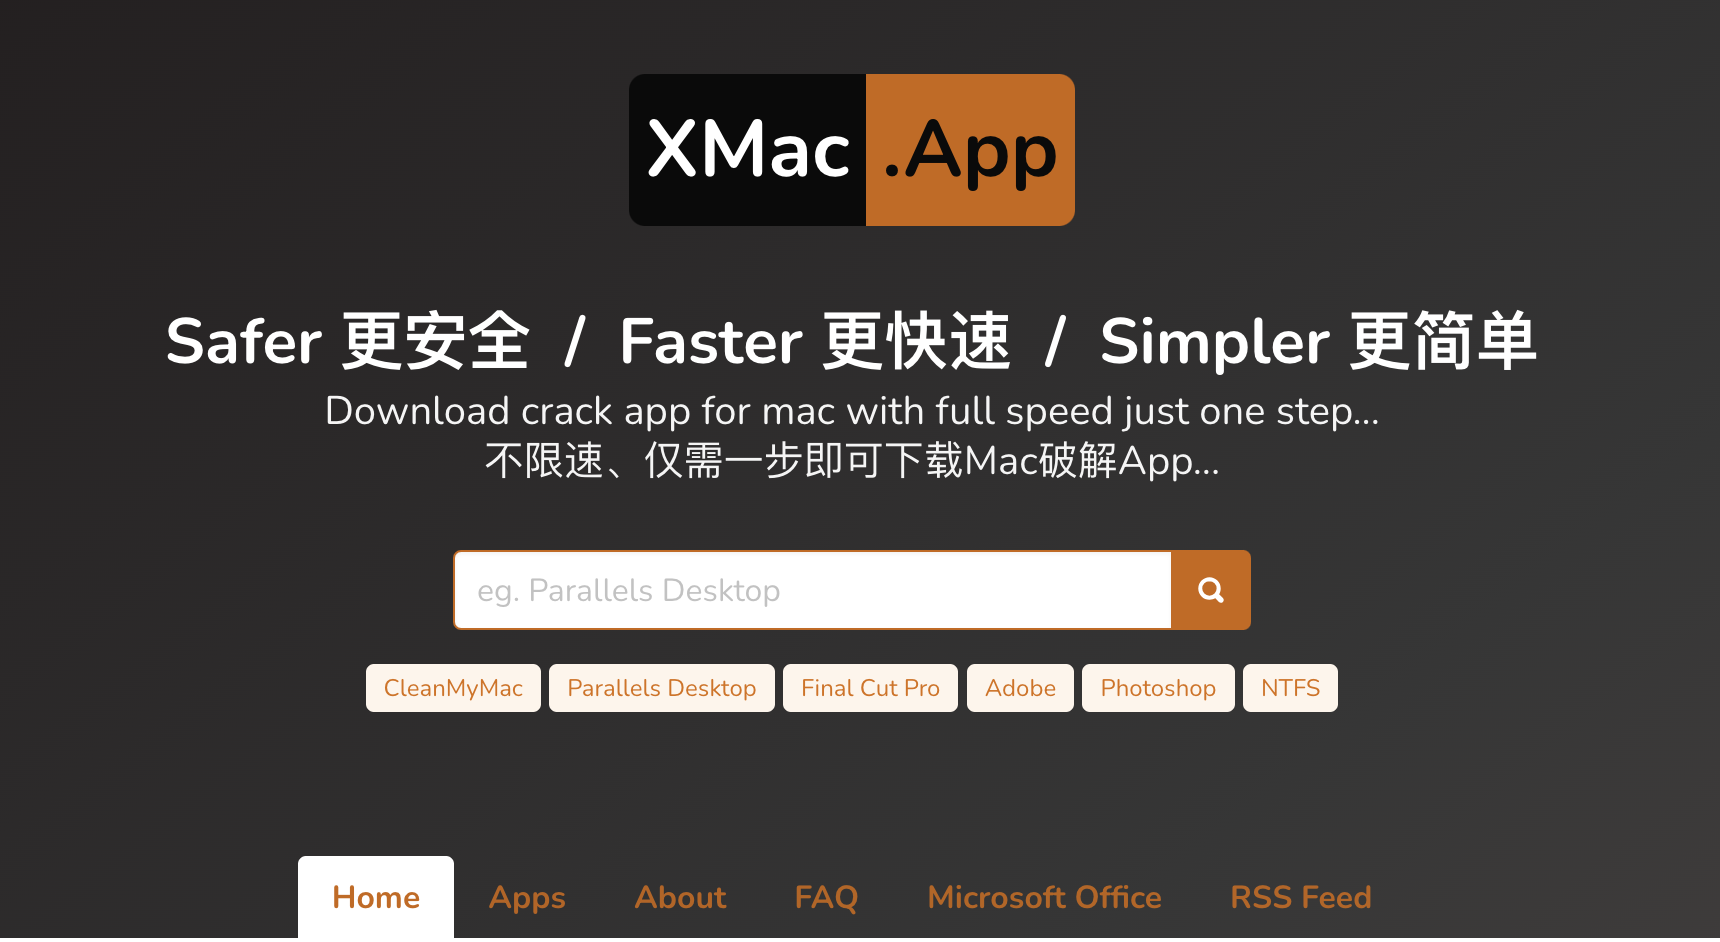 Mac软件下载网站-xmac.app